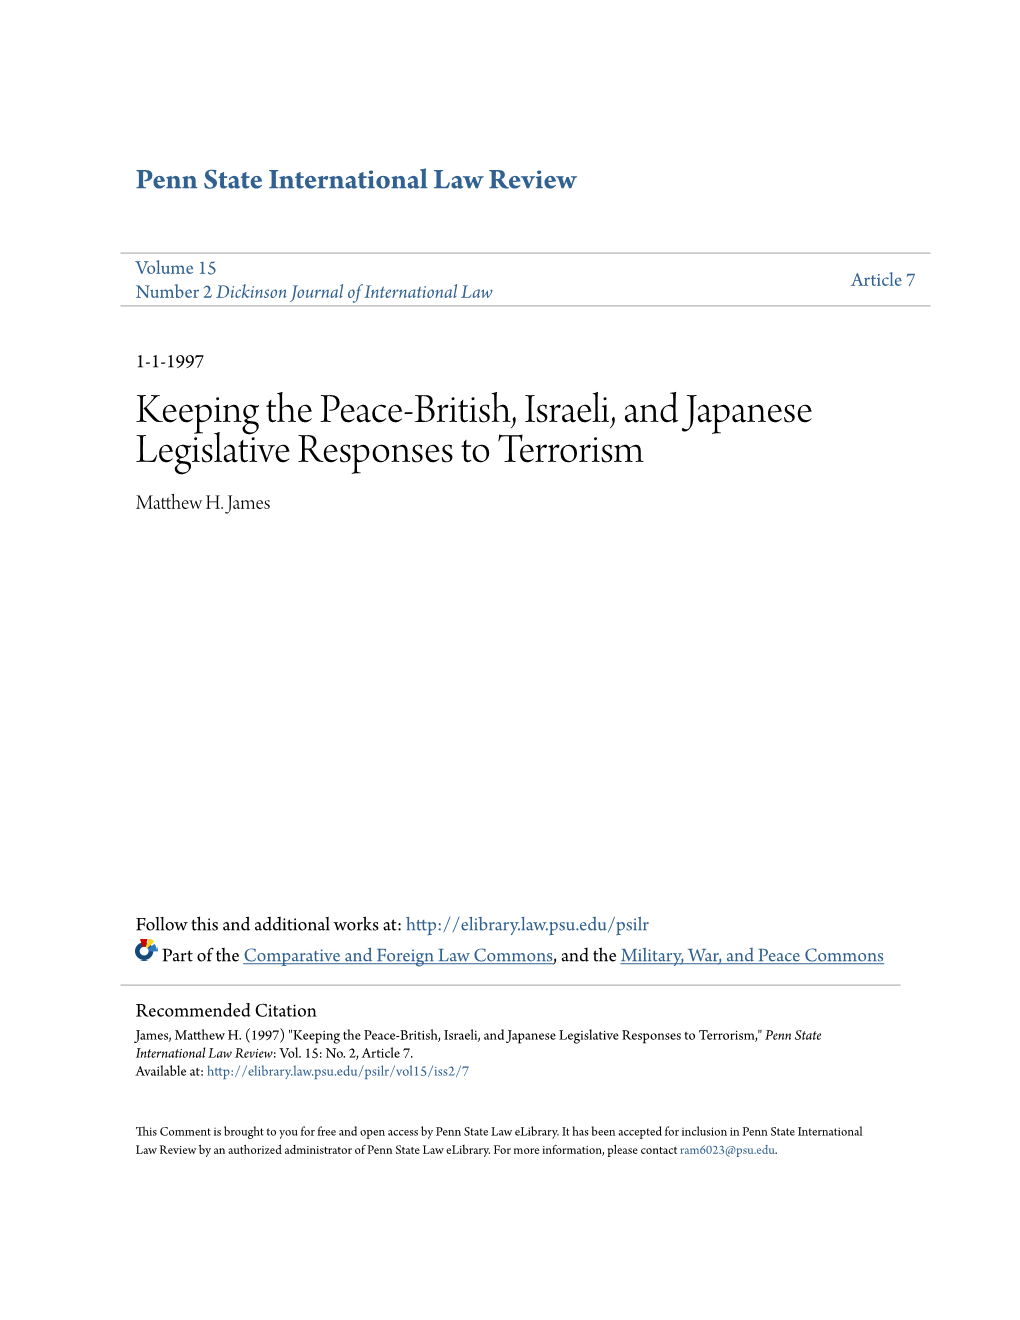 Keeping the Peace-British, Israeli, and Japanese Legislative Responses to Terrorism Matthew H